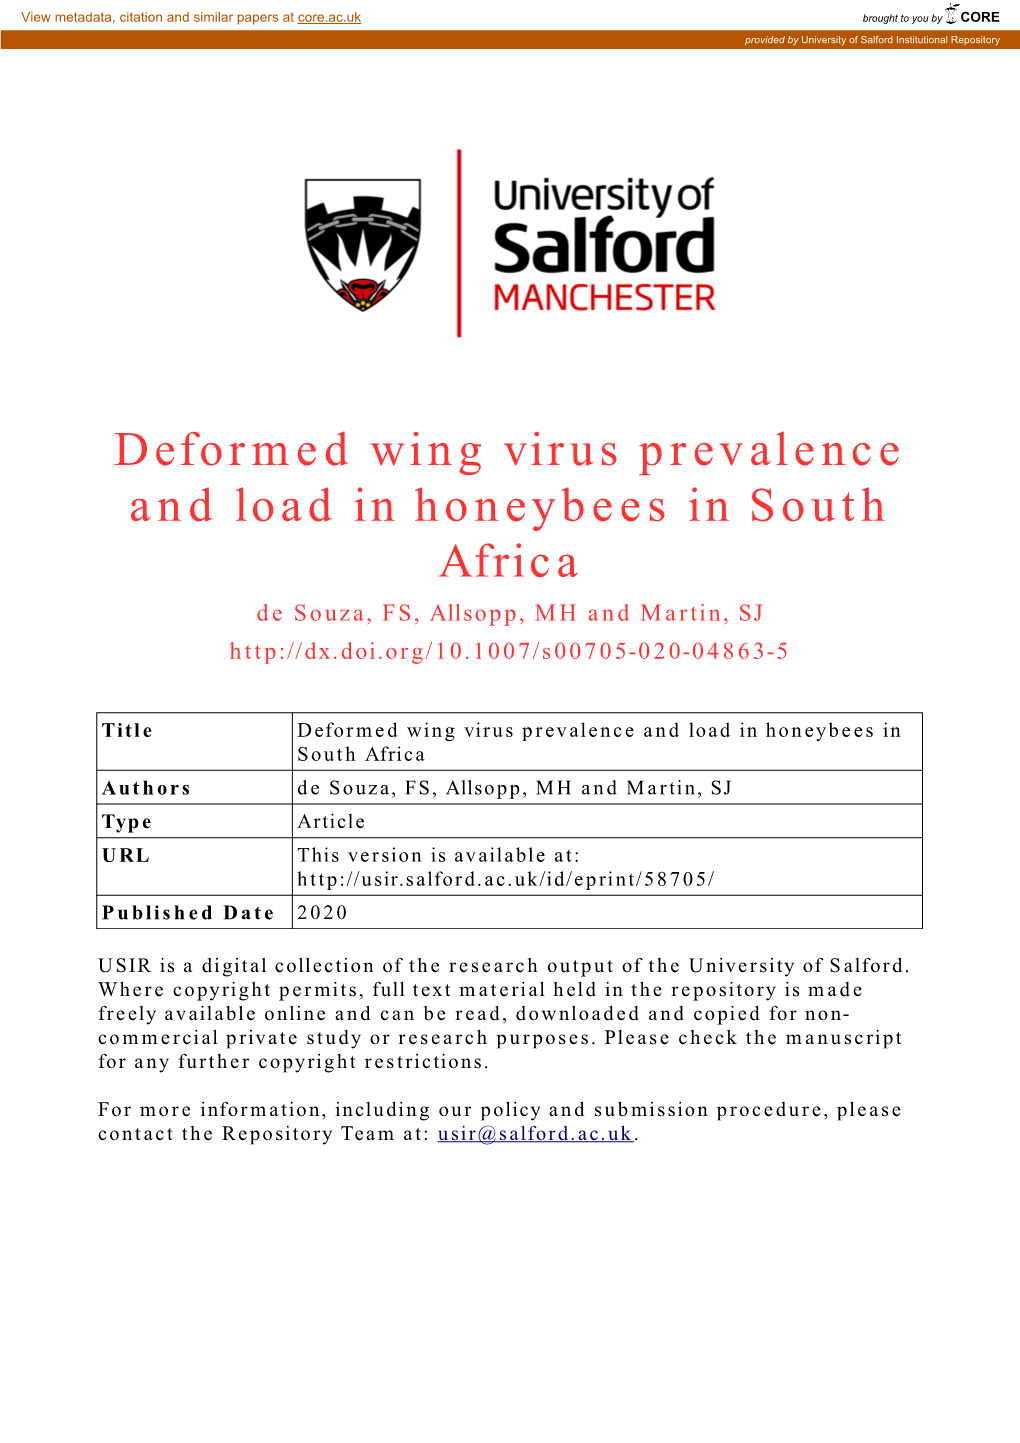 Deformed Wing Virus Prevalence and Load in Honeybees in South Africa De Souza, FS, Allsopp, MH and Martin, SJ